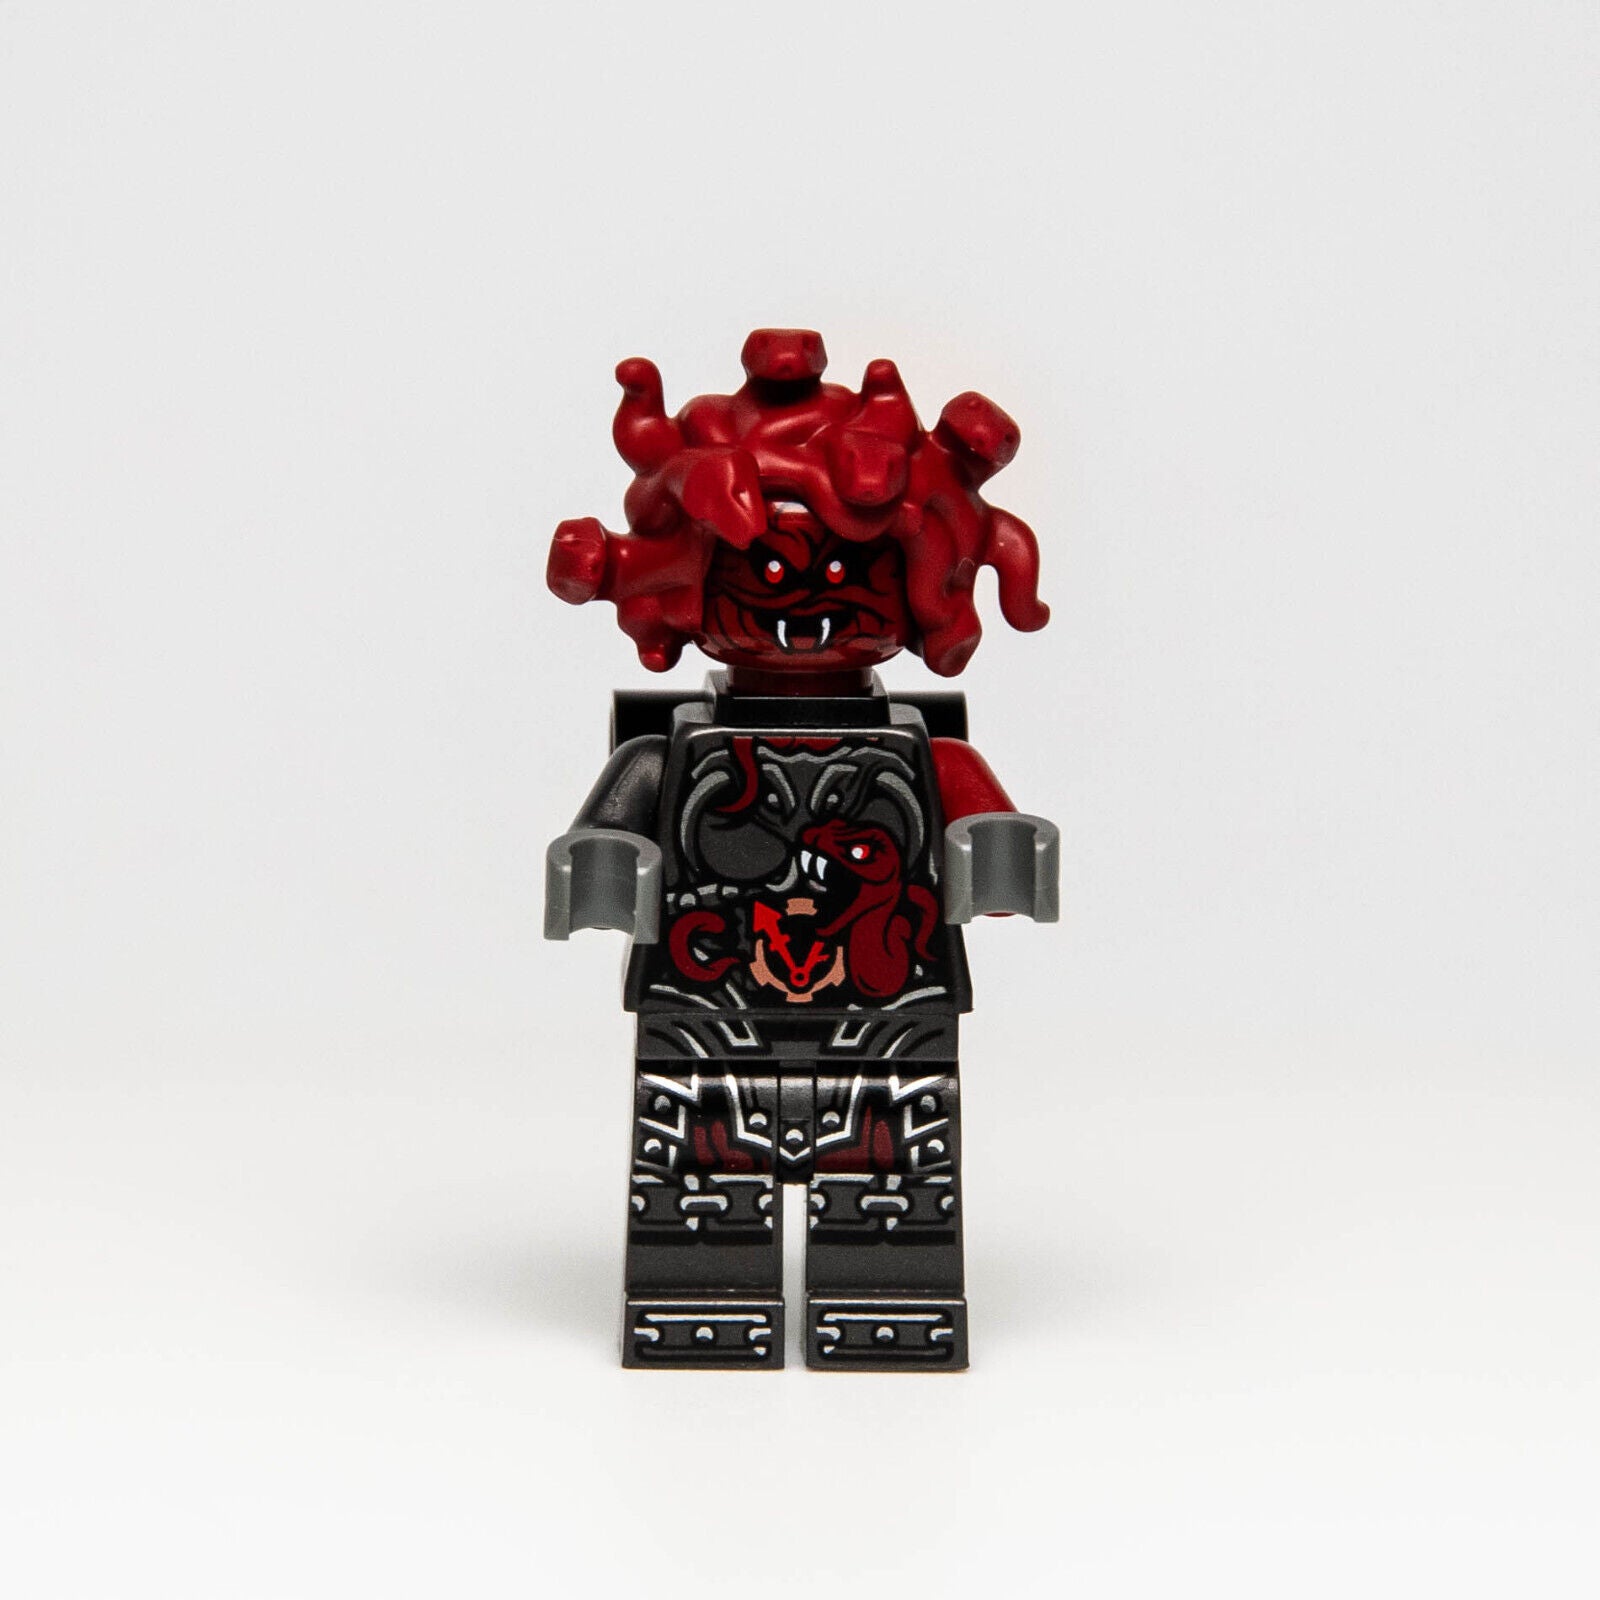 Lego Ninjago Minifigure: General Machia Bracket njo301 70625 Samurai Hands Time